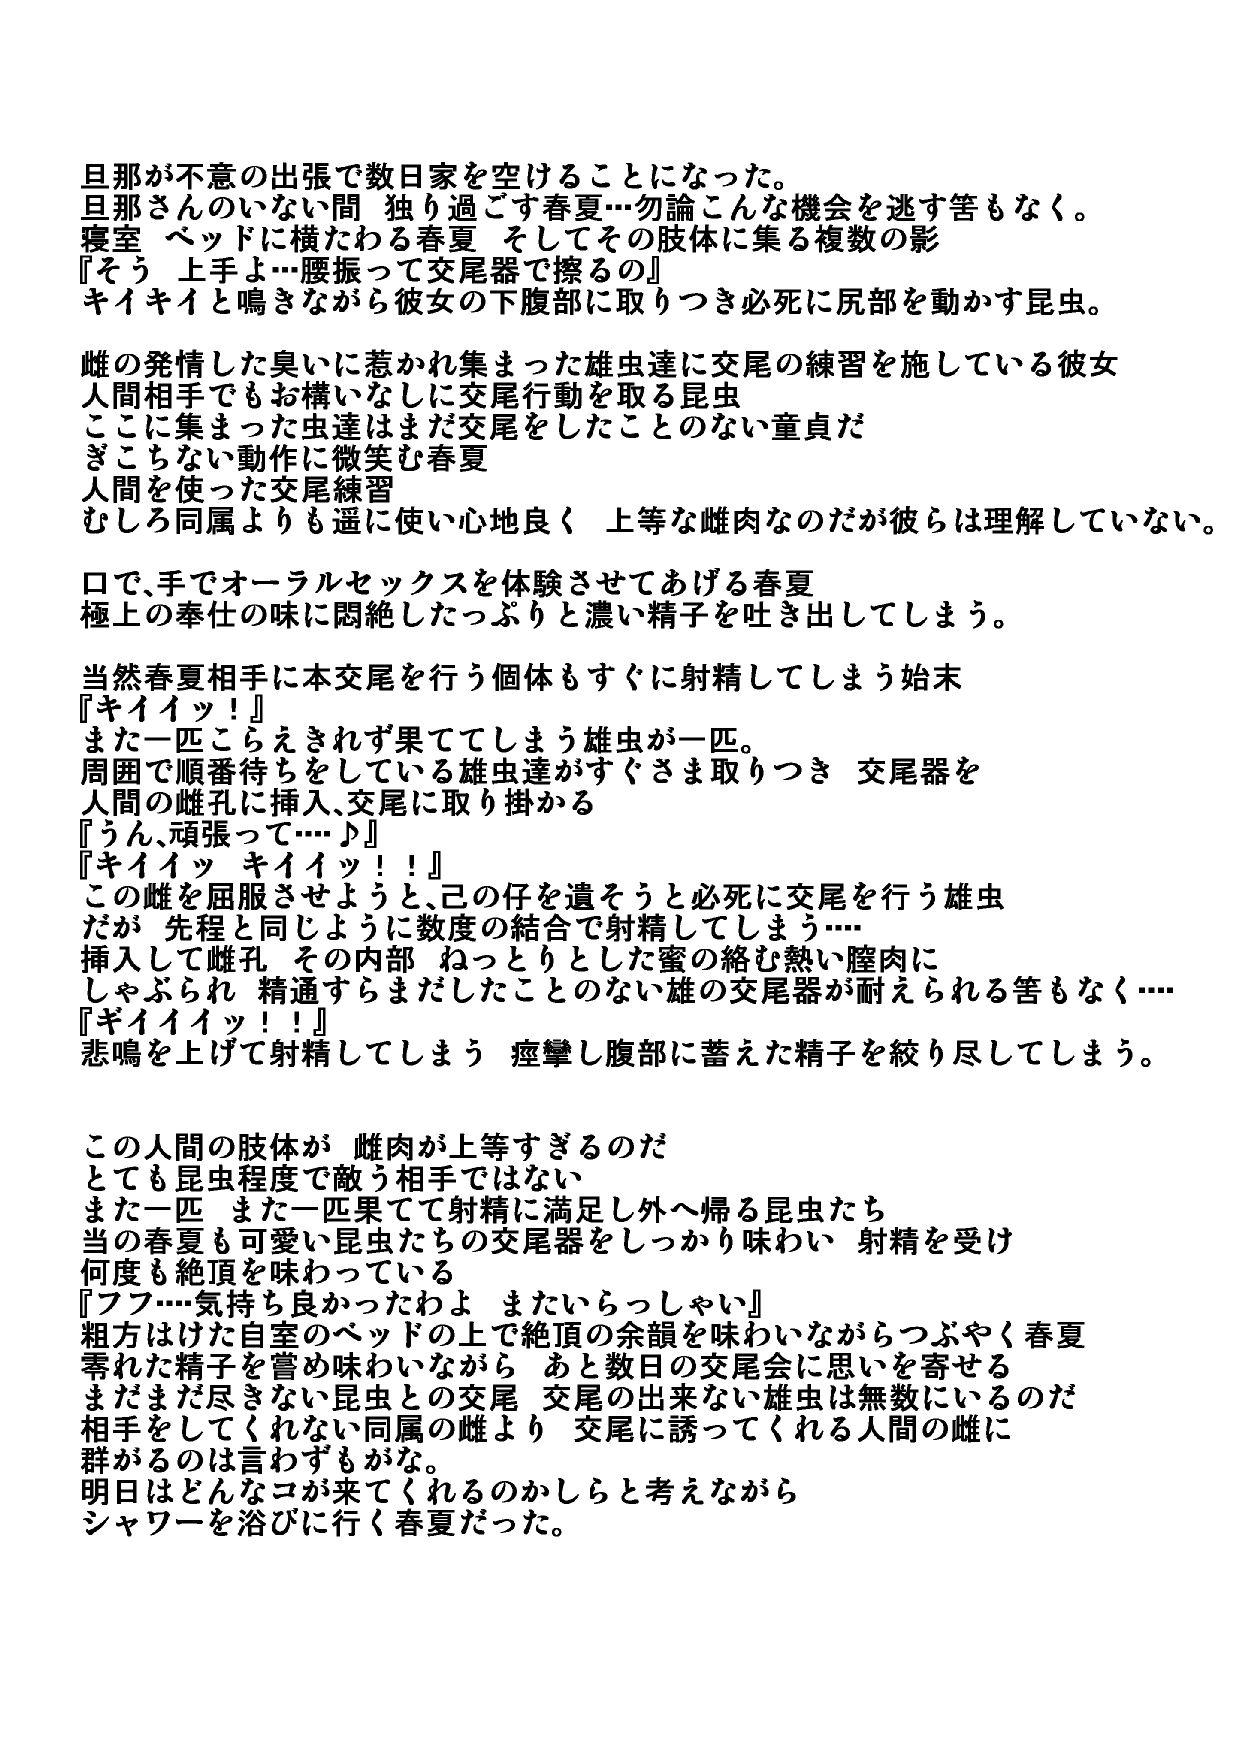 Plug Harukamushikan3 - Toheart2 Casero - Page 13